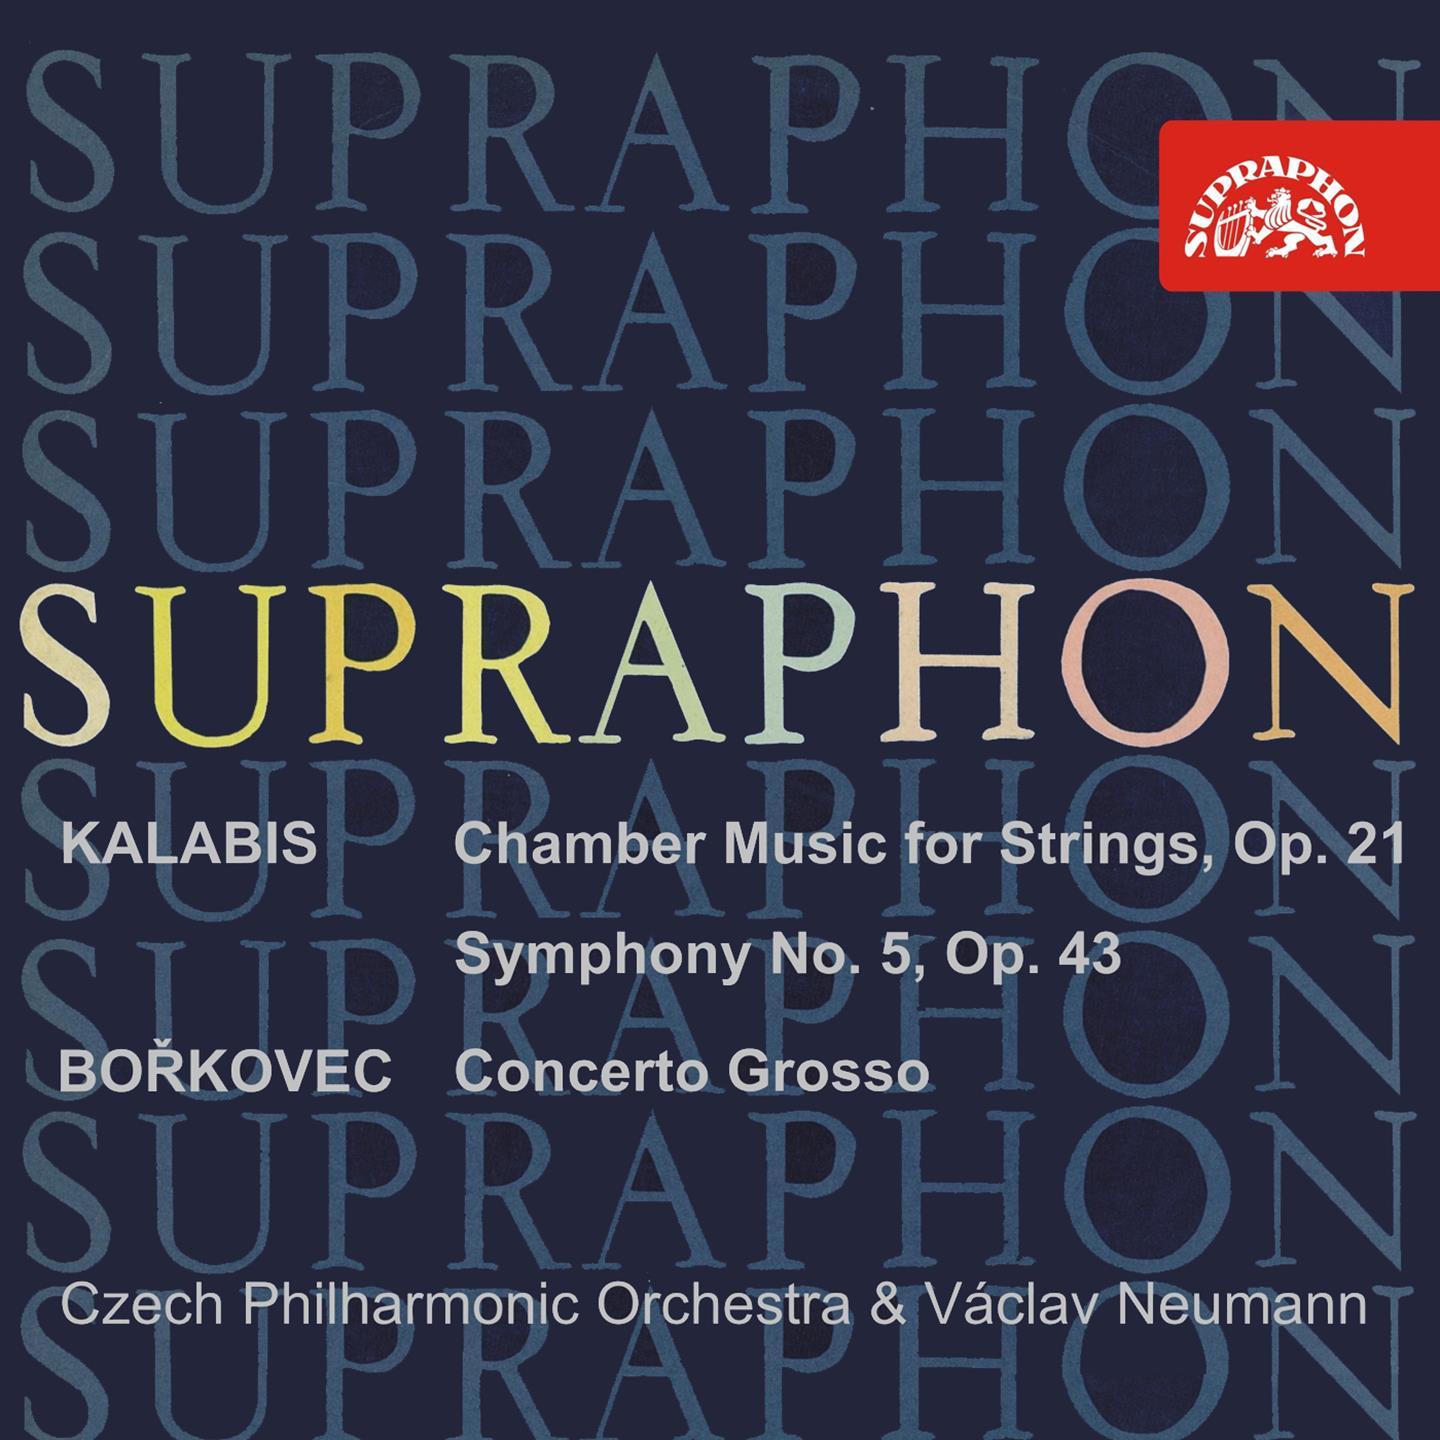 Kalabis: Chamber Music for Strings, Symphony No. 5, Op. 43  Bo kovec: Concerto grosso